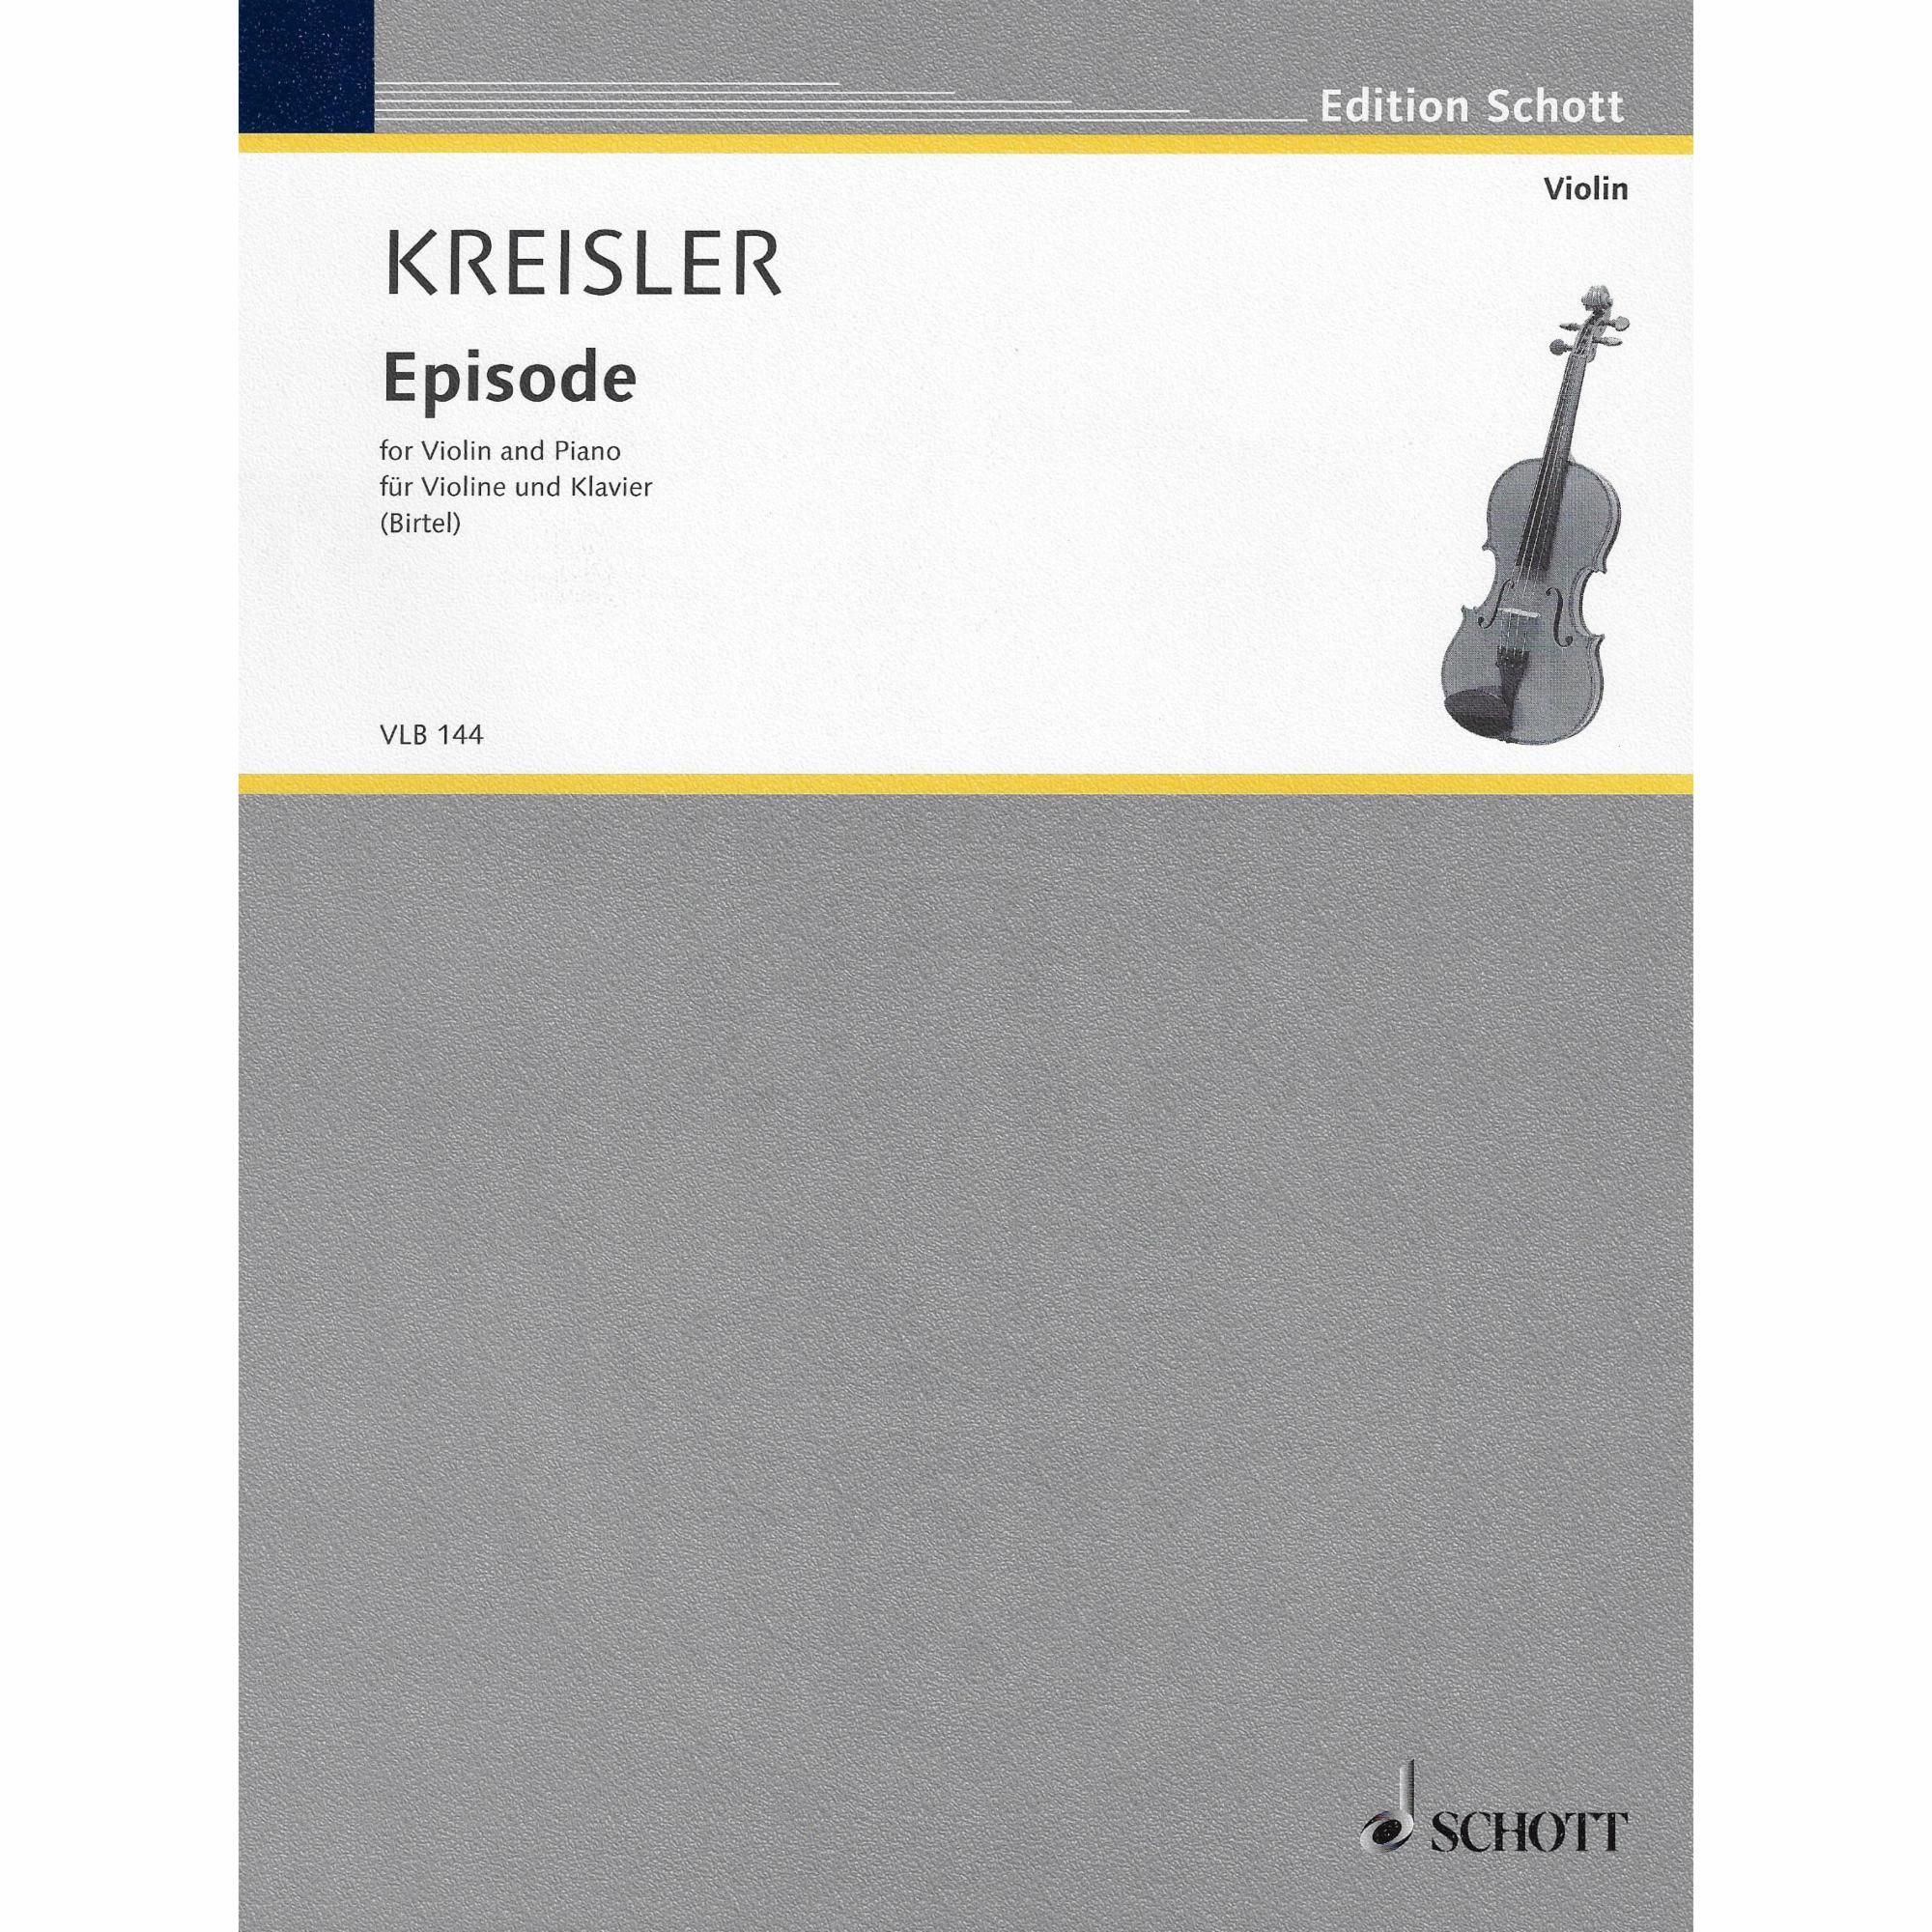 Kreisler -- Episode for Violin and Piano